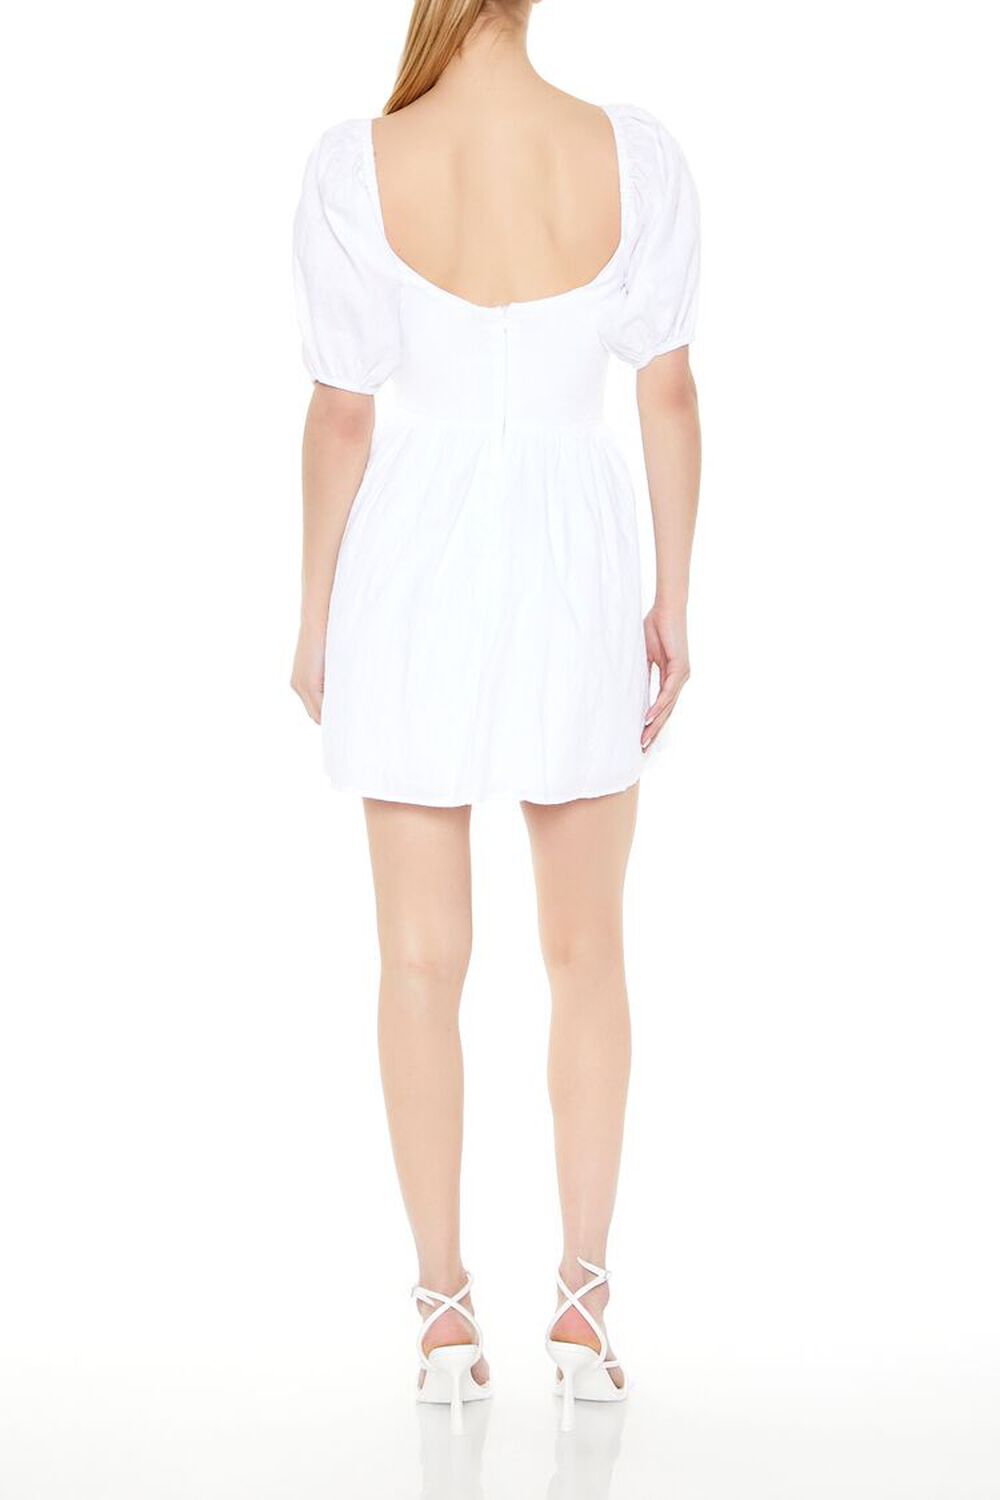 WHITE Bustier Babydoll Mini Dress, image 3